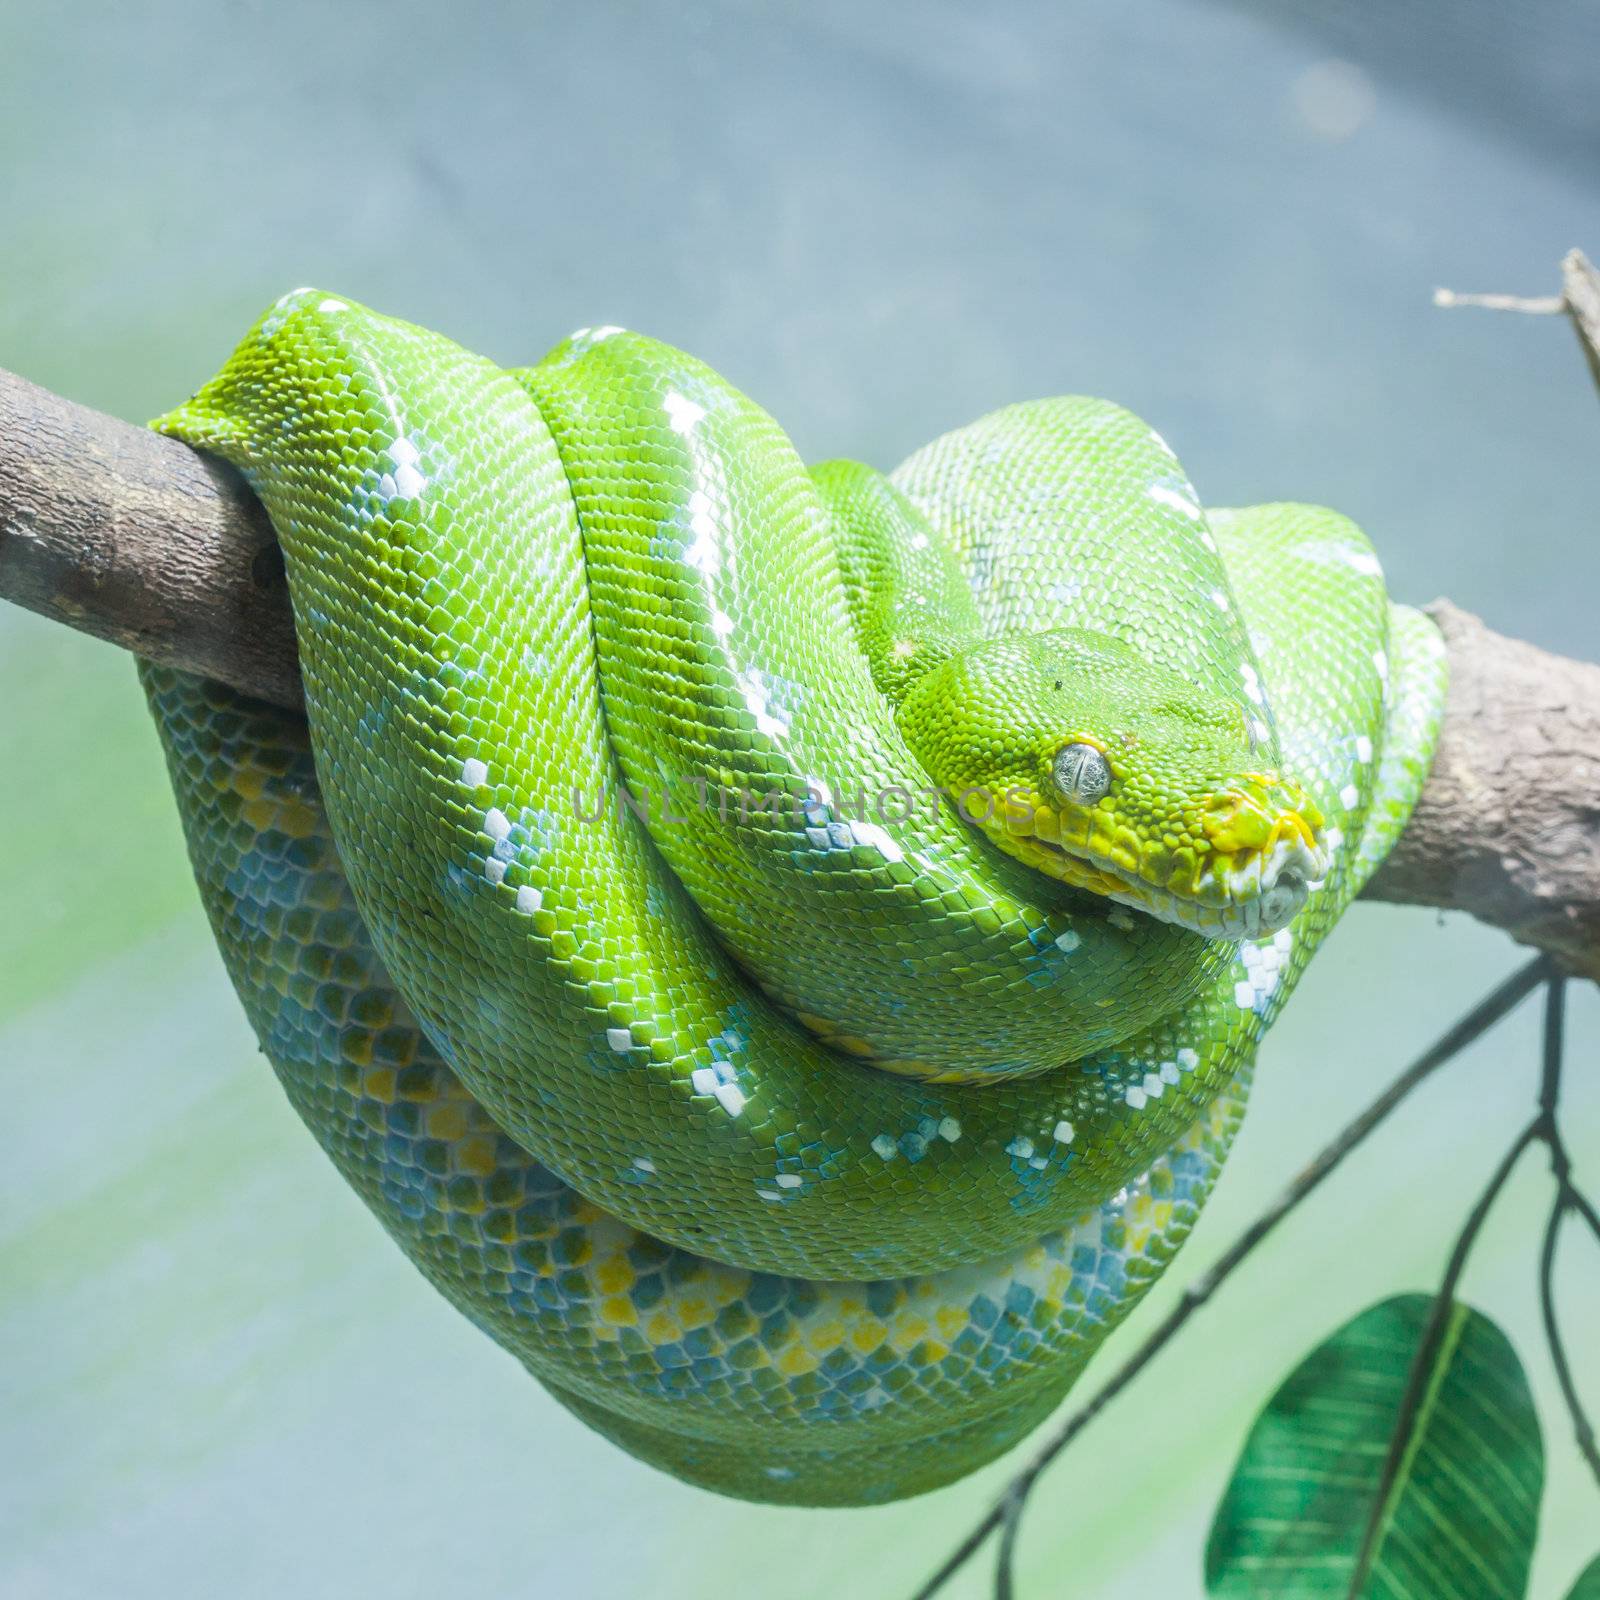 Green snake by jame_j@homail.com